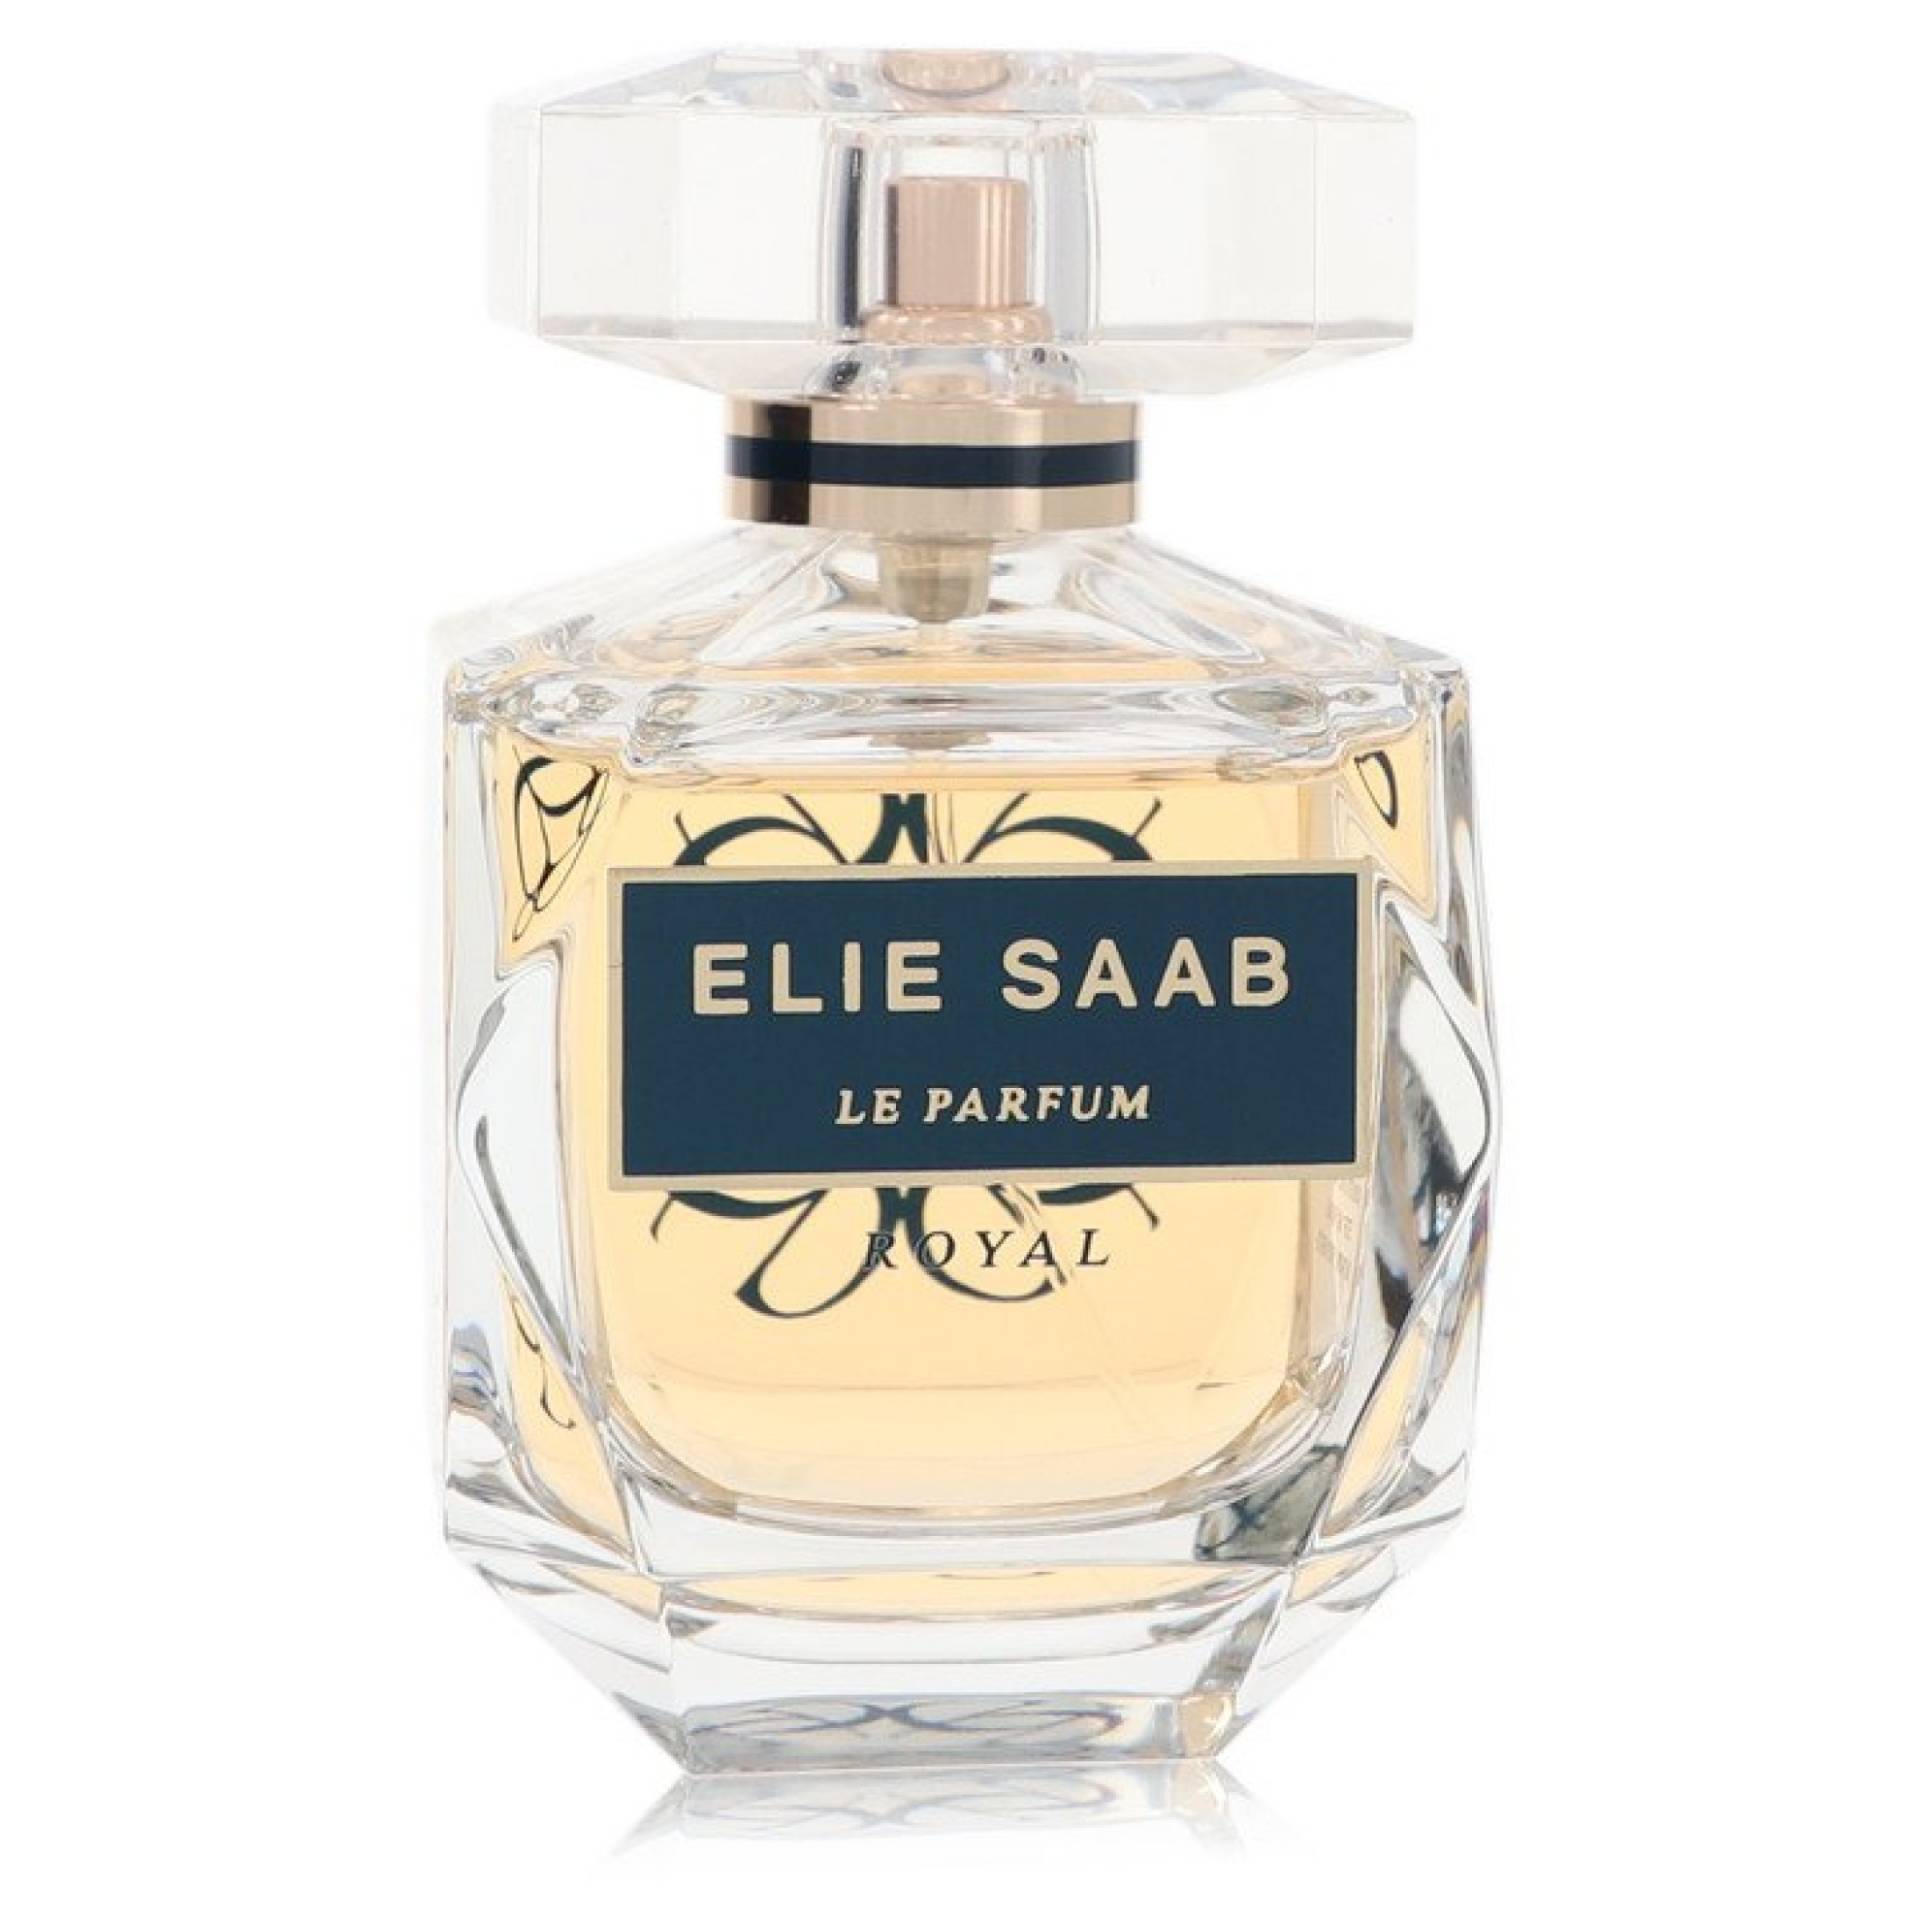 Elie Saab Le Parfum Royal  Eau De Parfum Spray (Tester) 90 ml von Elie Saab